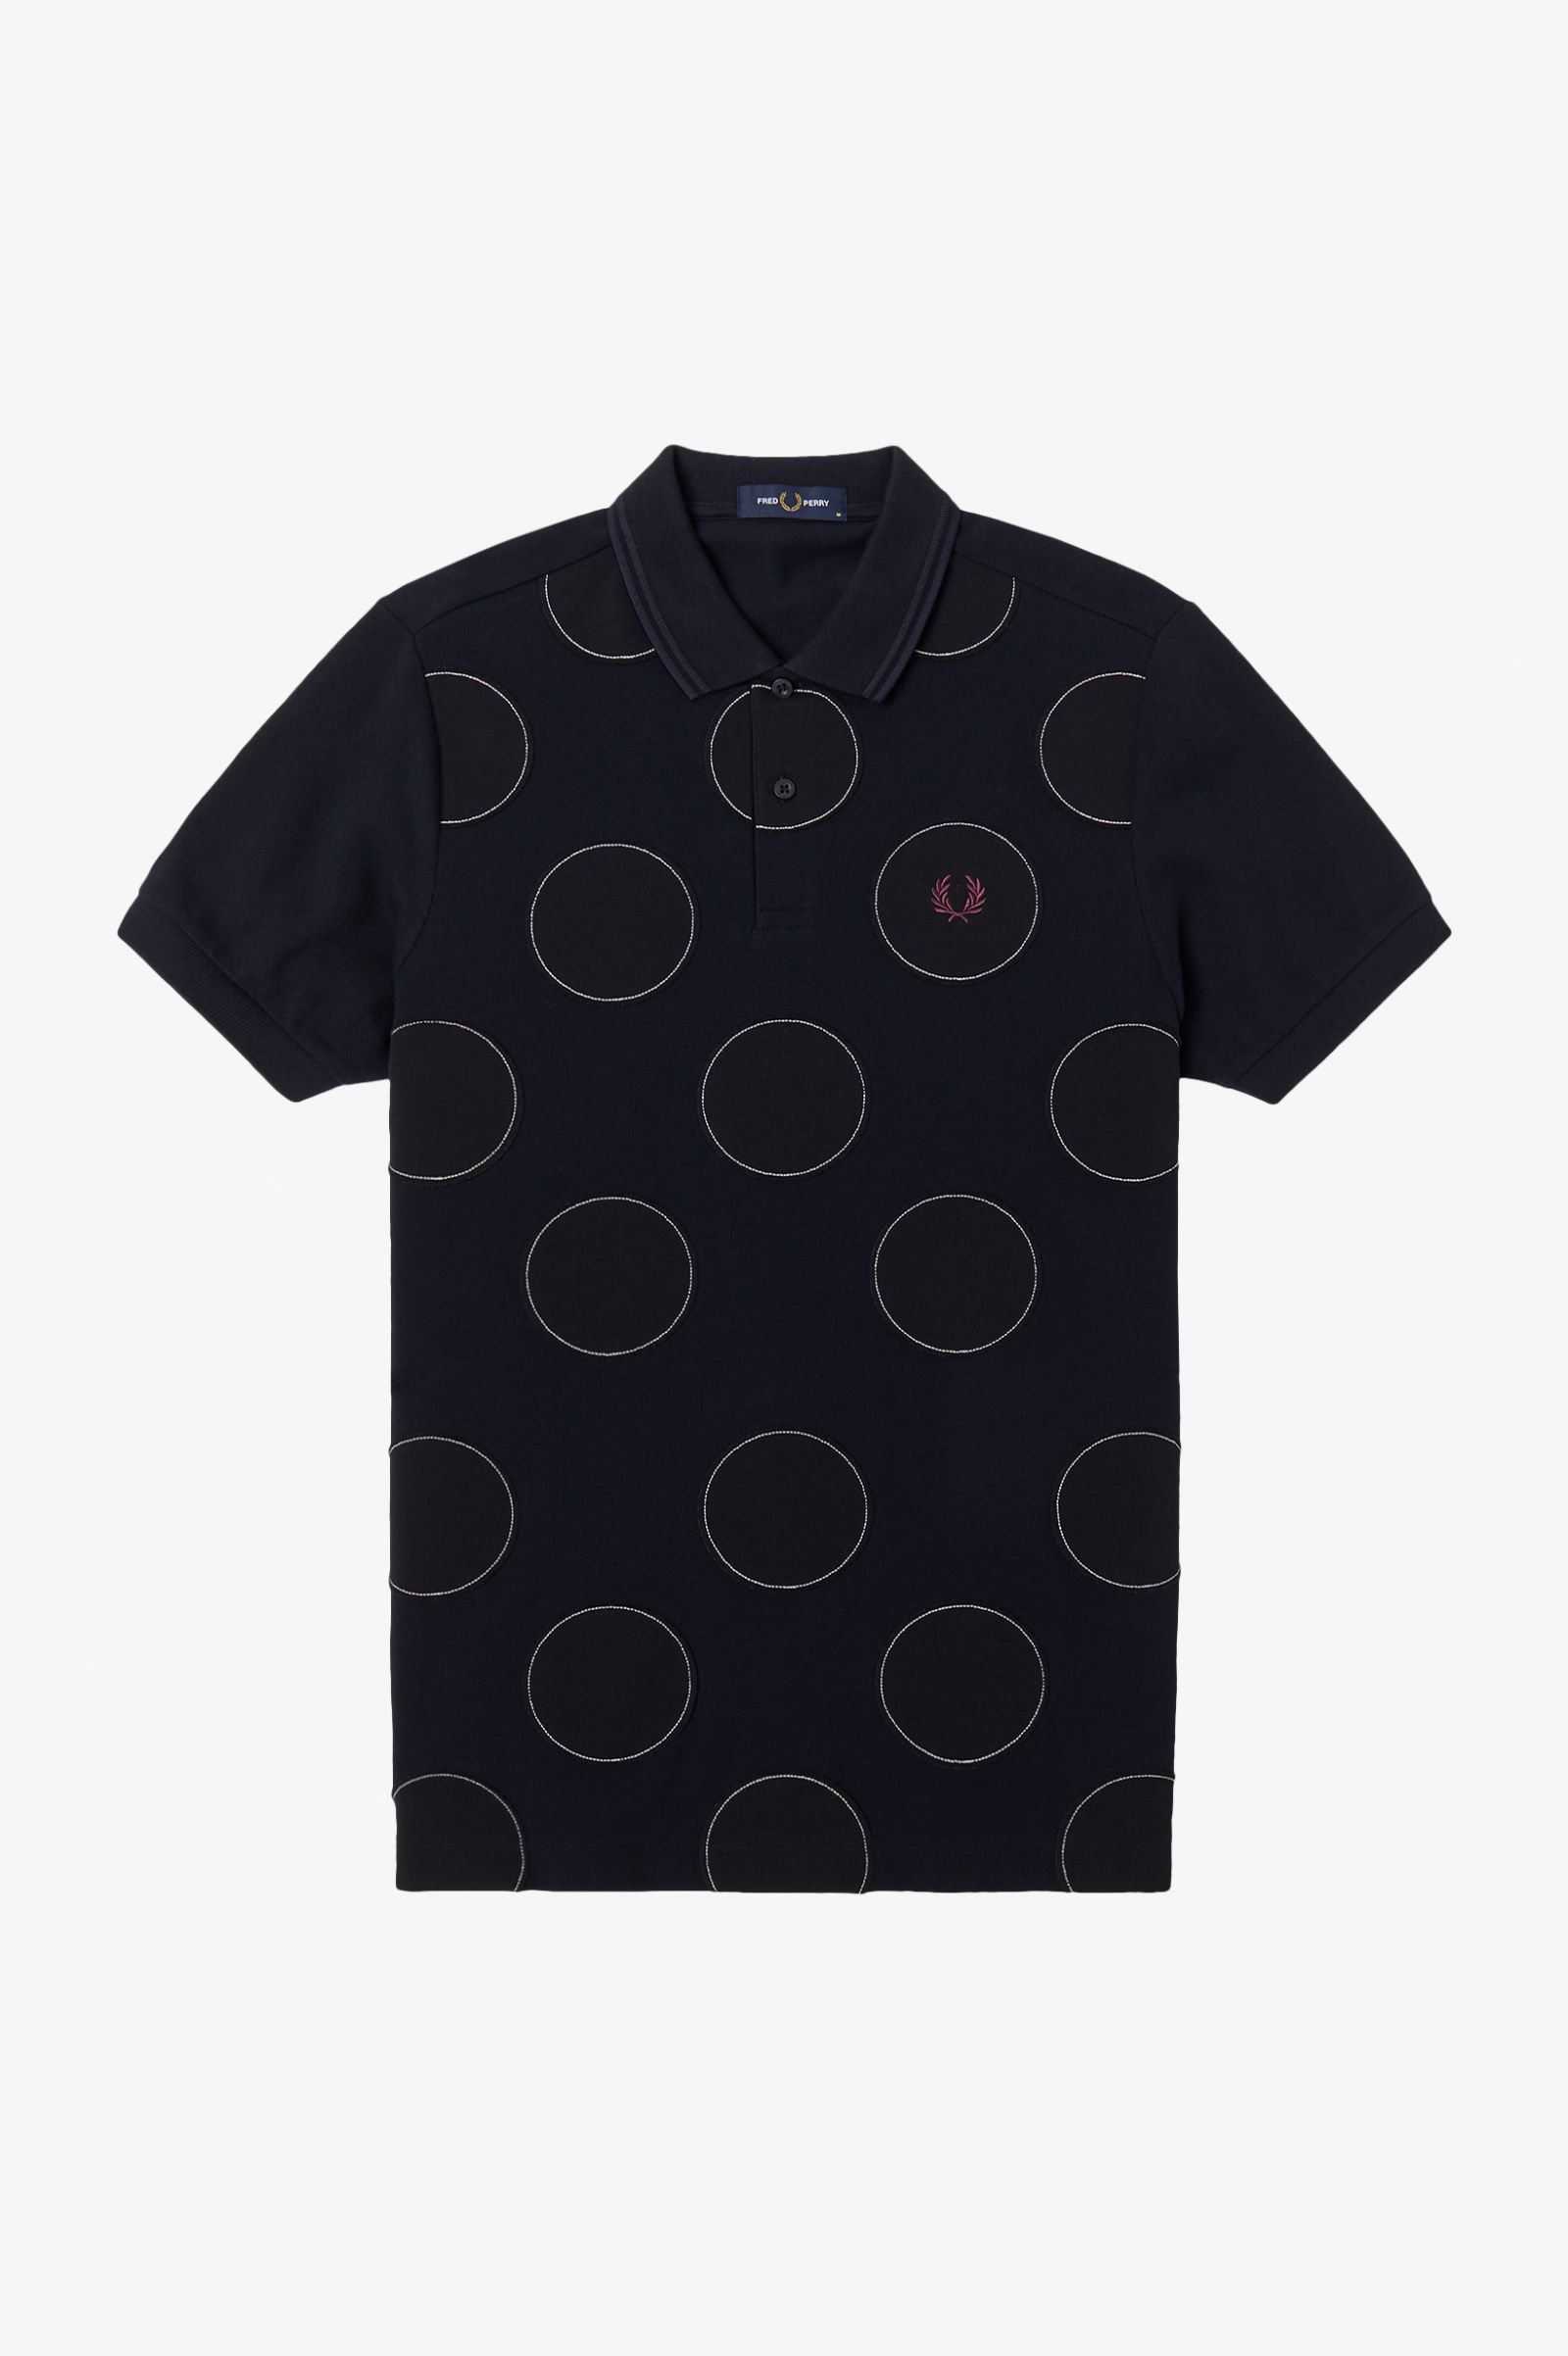 2XL Fred Perry Printed Polka Dot Button Down Shirt # M5218 395 Navy Men M